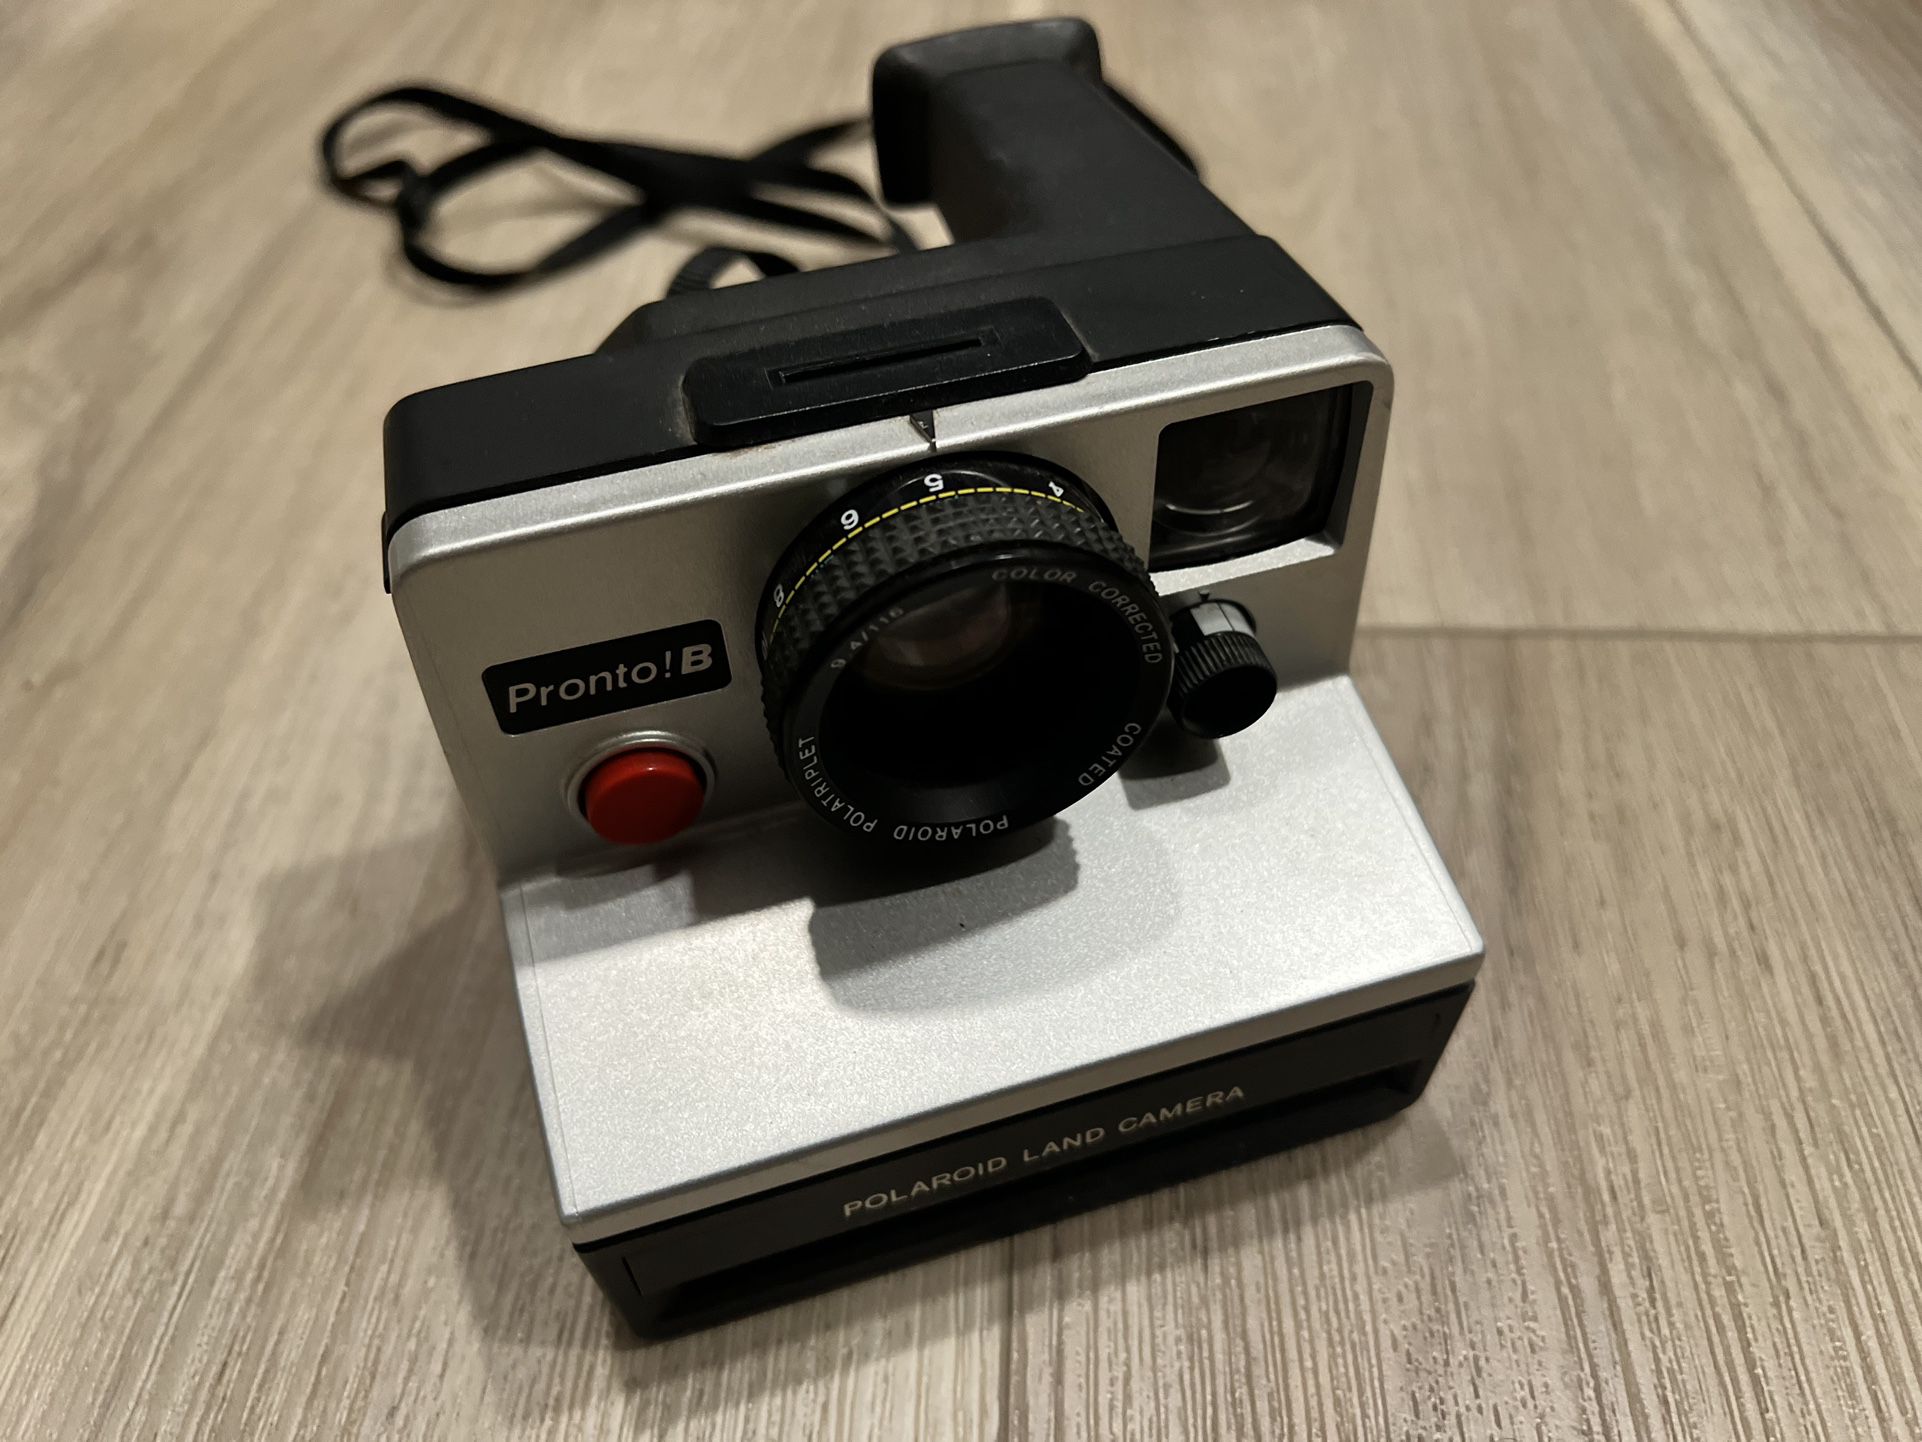 “Pronto! B” Polaroid Land Camera 